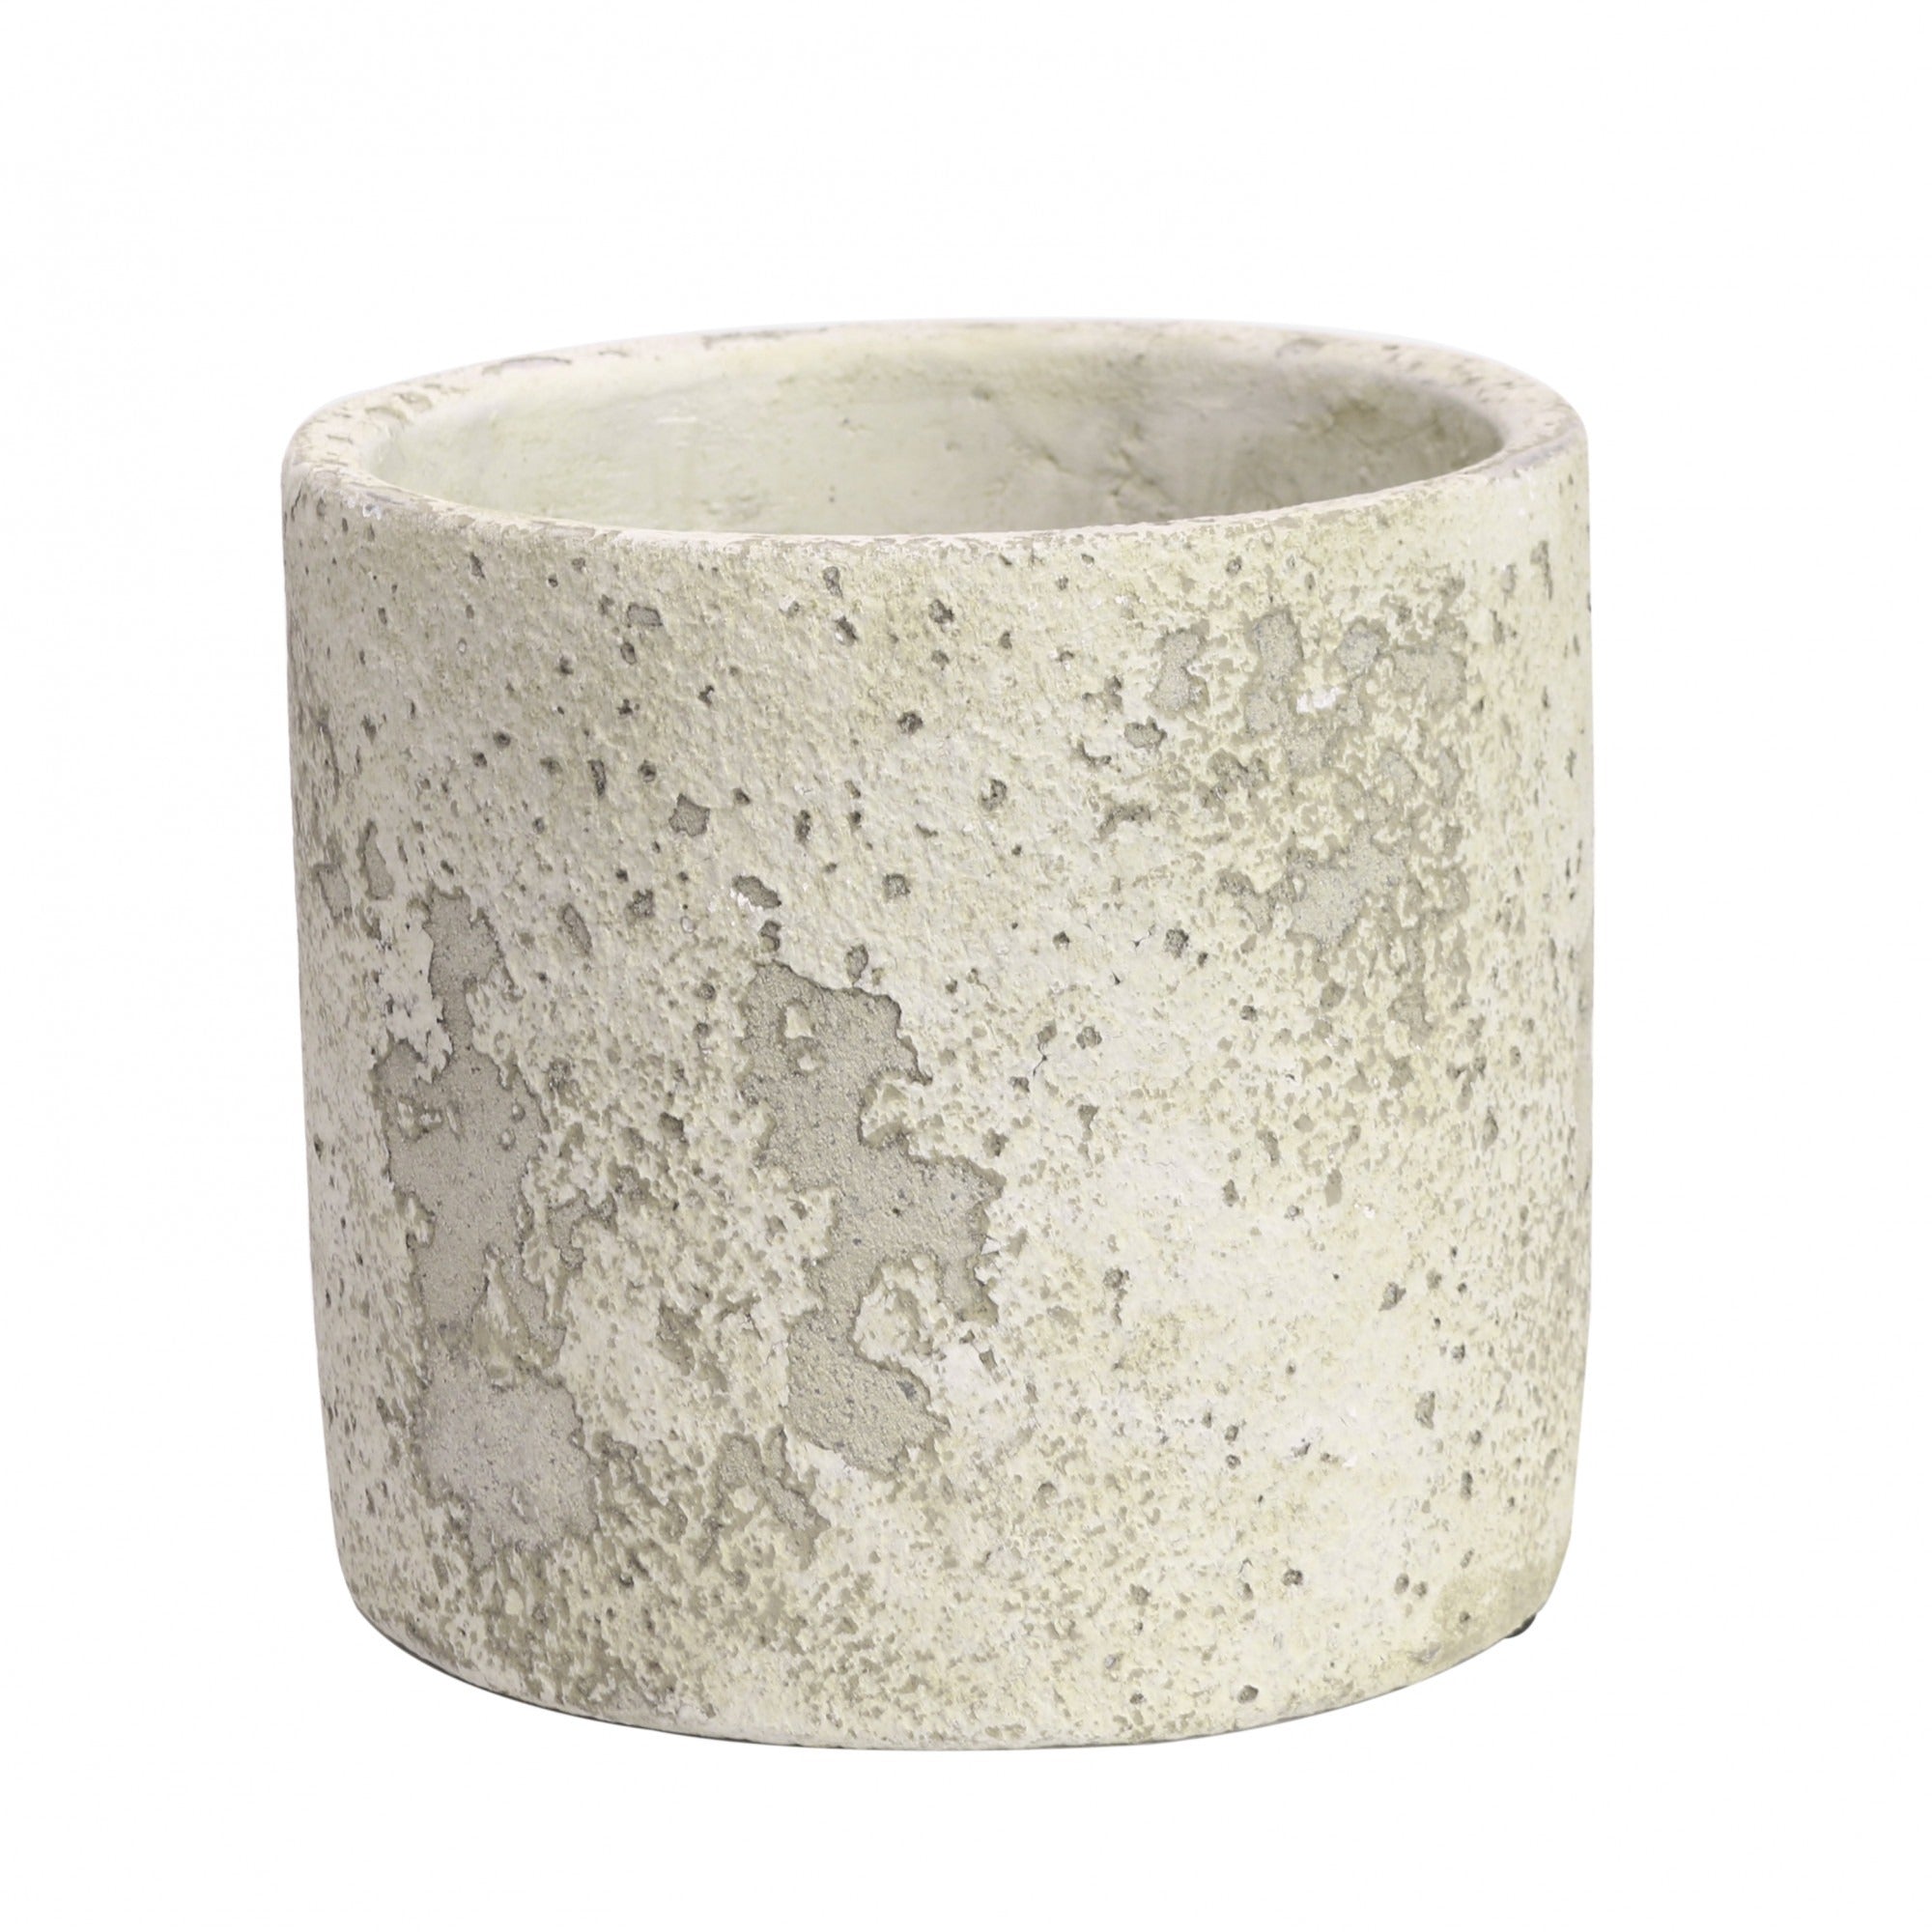 View Rustic Round Cement Flower Pot 13cm information